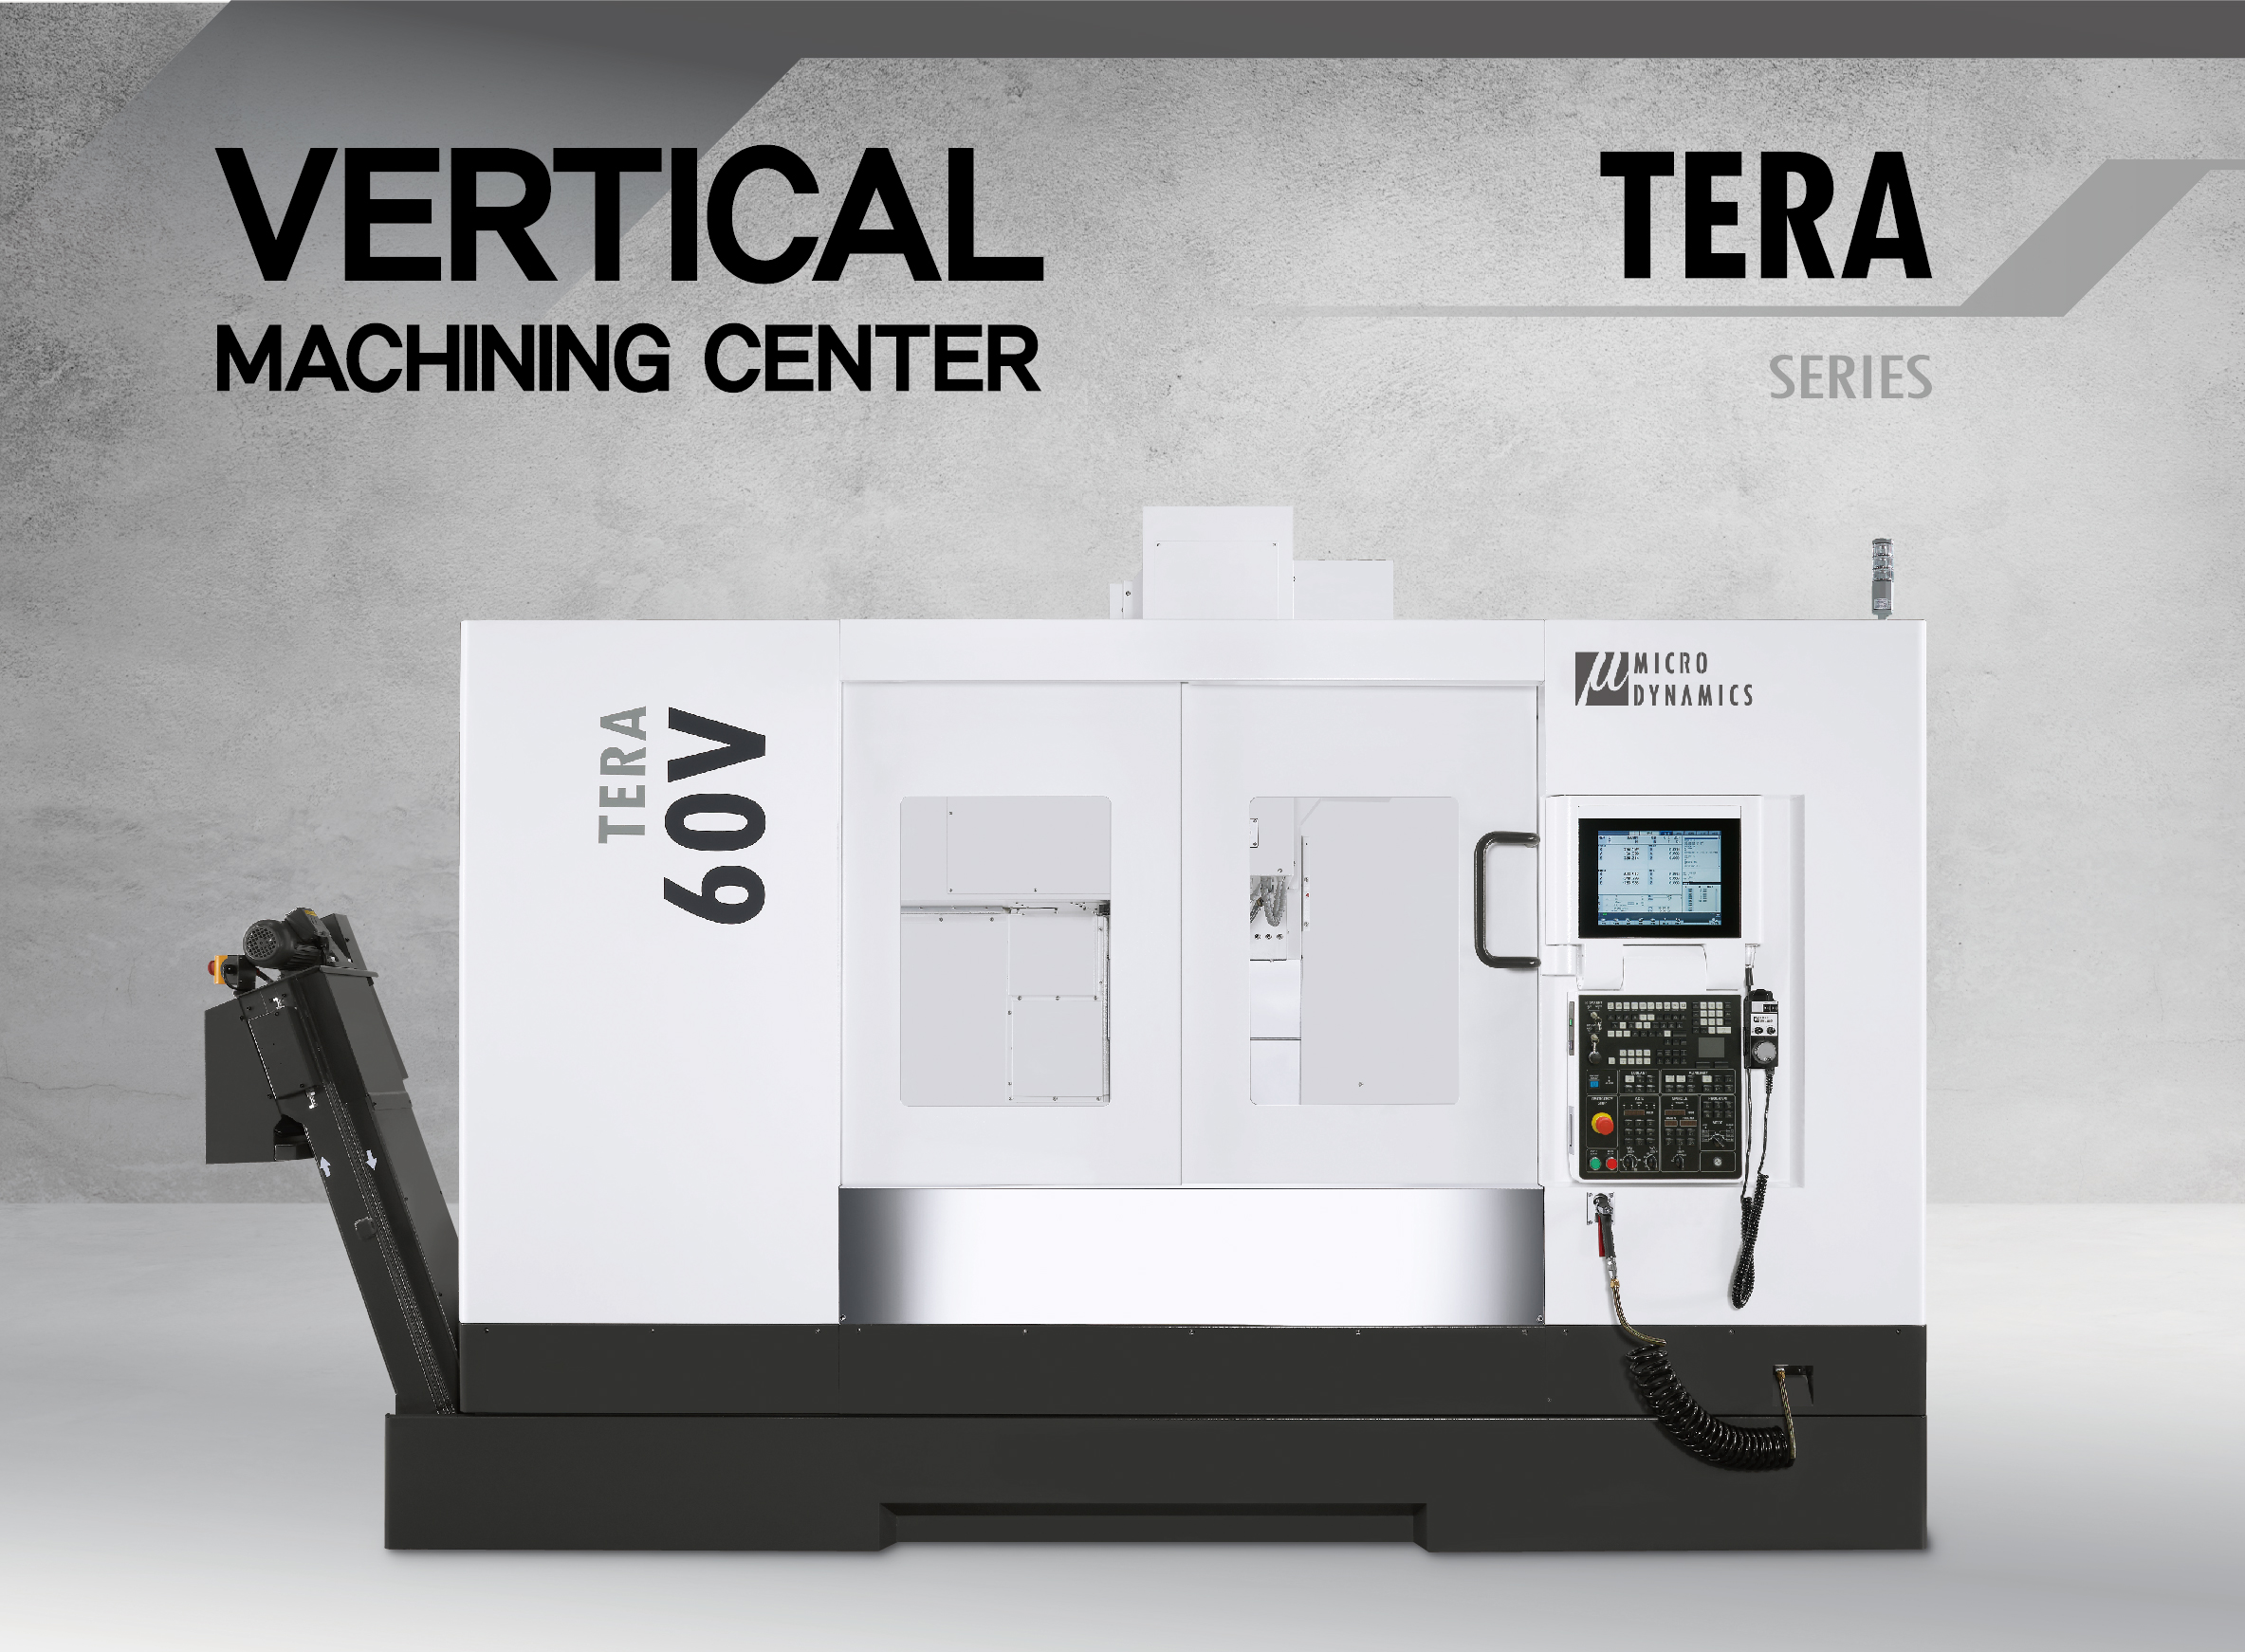 
                                TERA sereis - Vertical Machining Center
                            